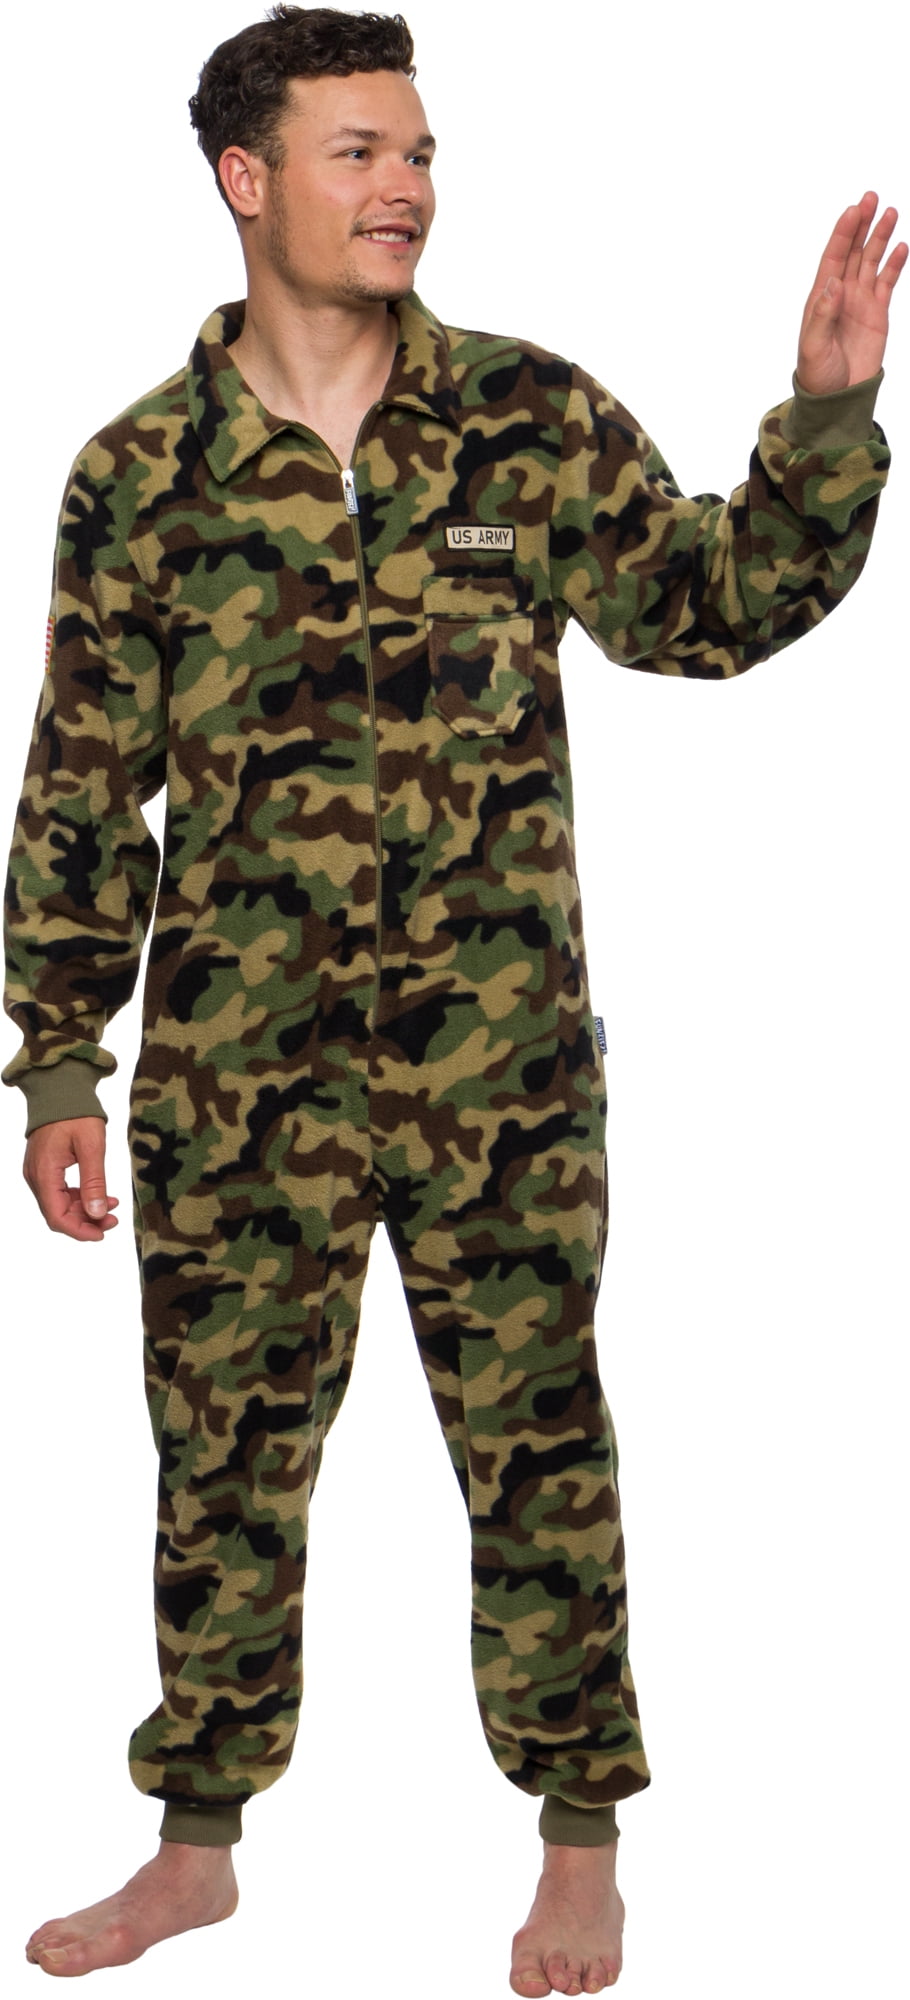 L 36-38  NEW Men's Camouflage Skin Suit Adult Camo Halloween Costume Sz 